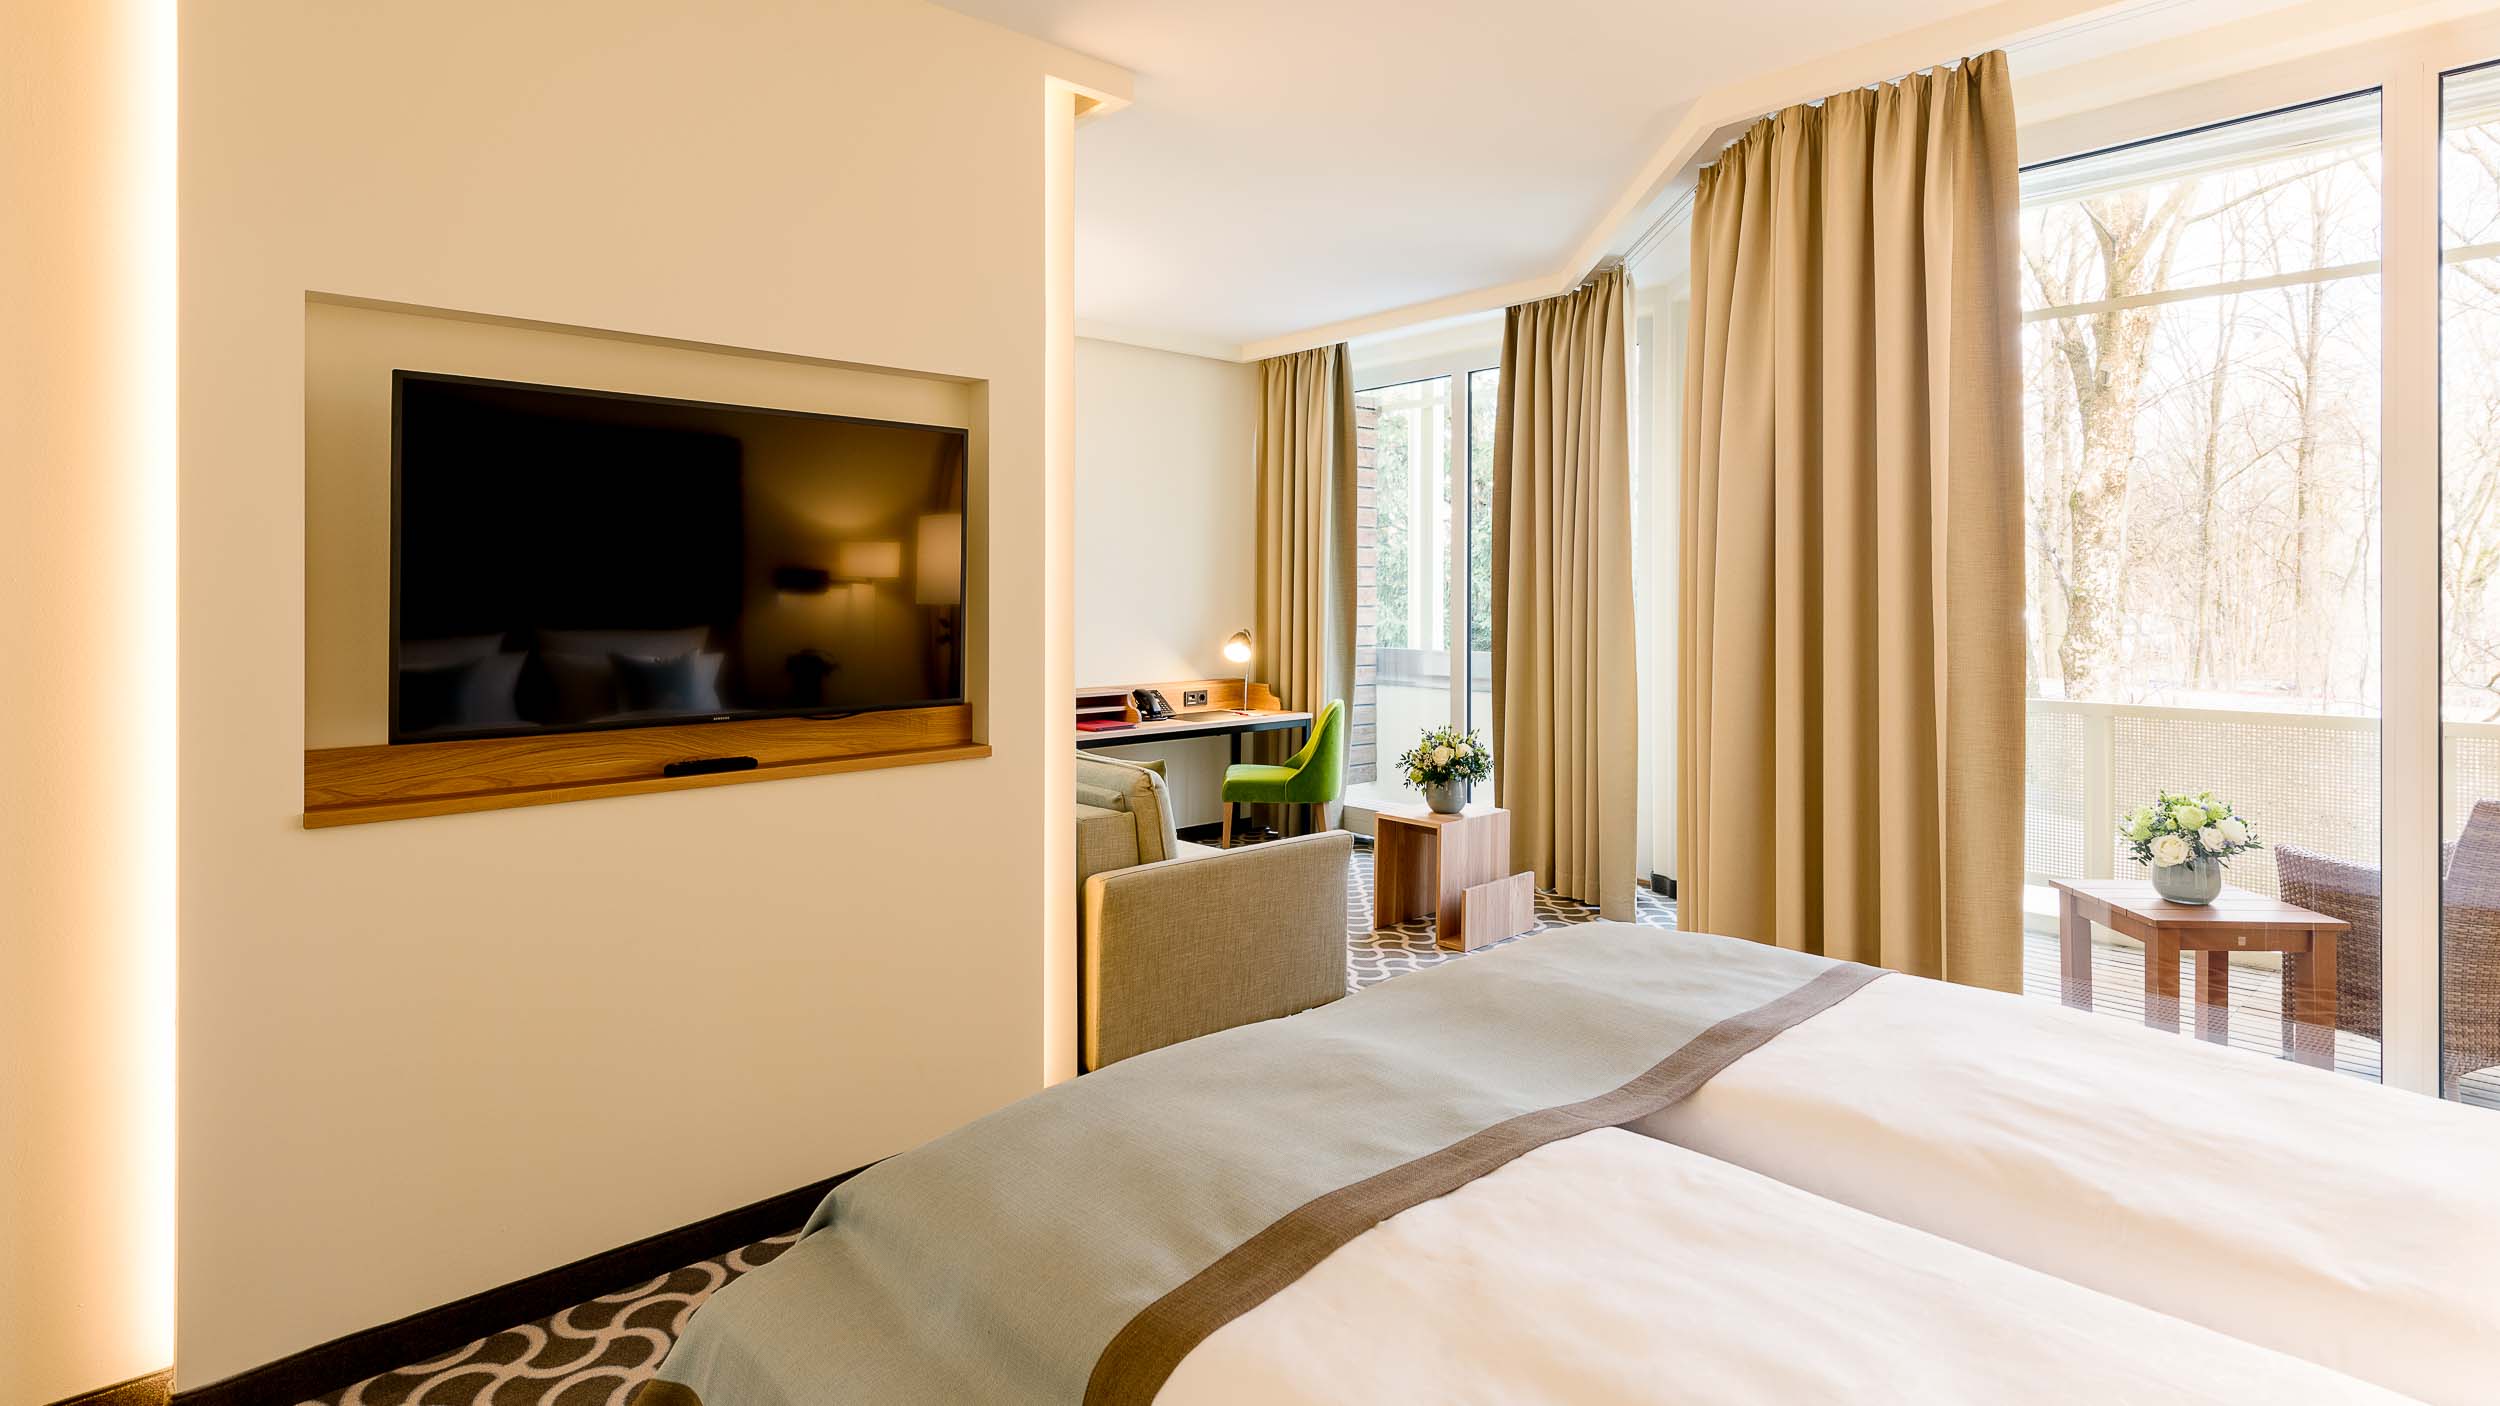 Doppelzimmer zum Bestpreis im 4 Sterne Parkhotel Rothof in München 